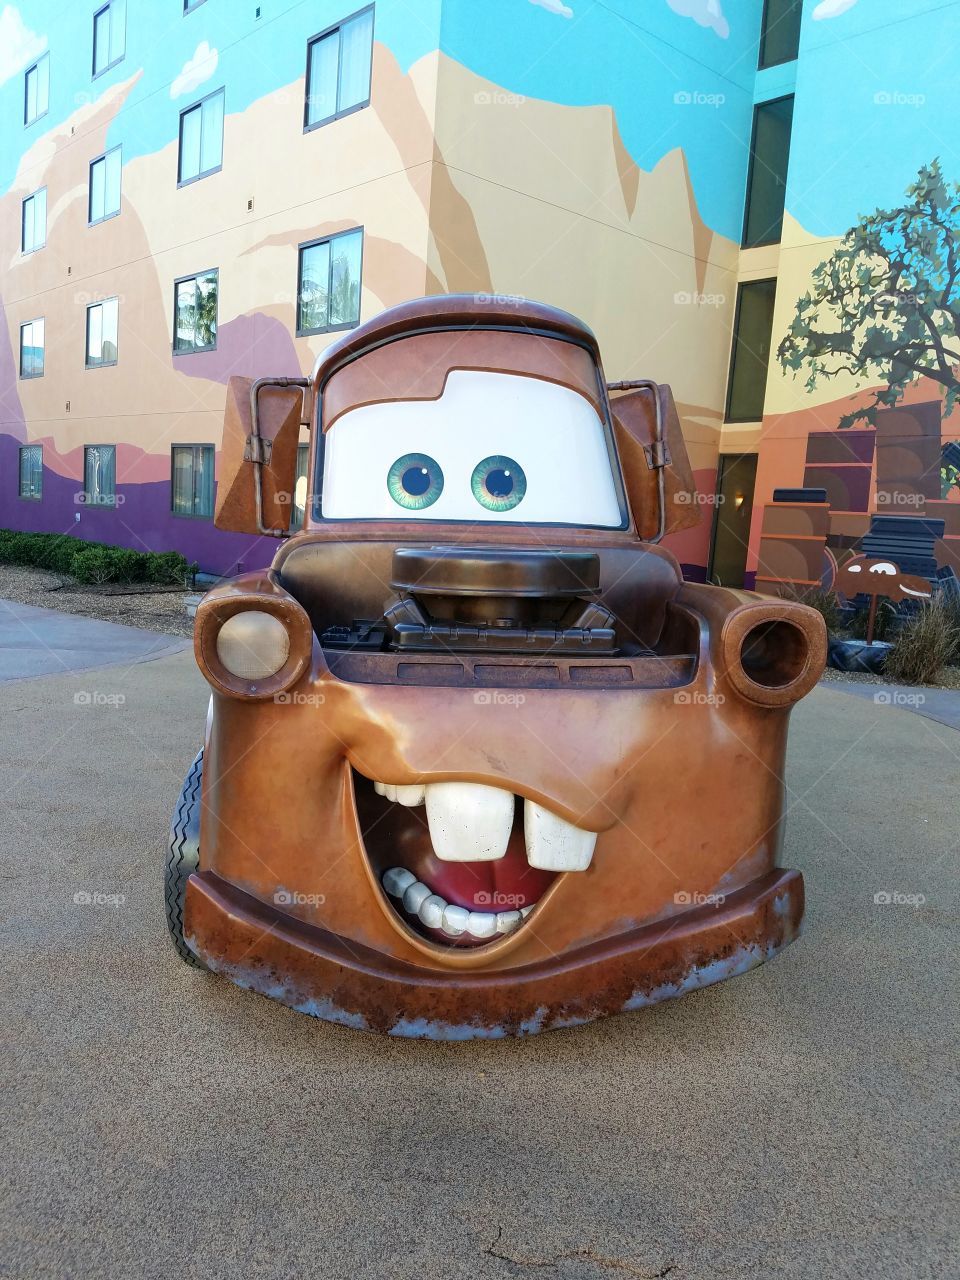 Mater at Disney's Art of Animation resort